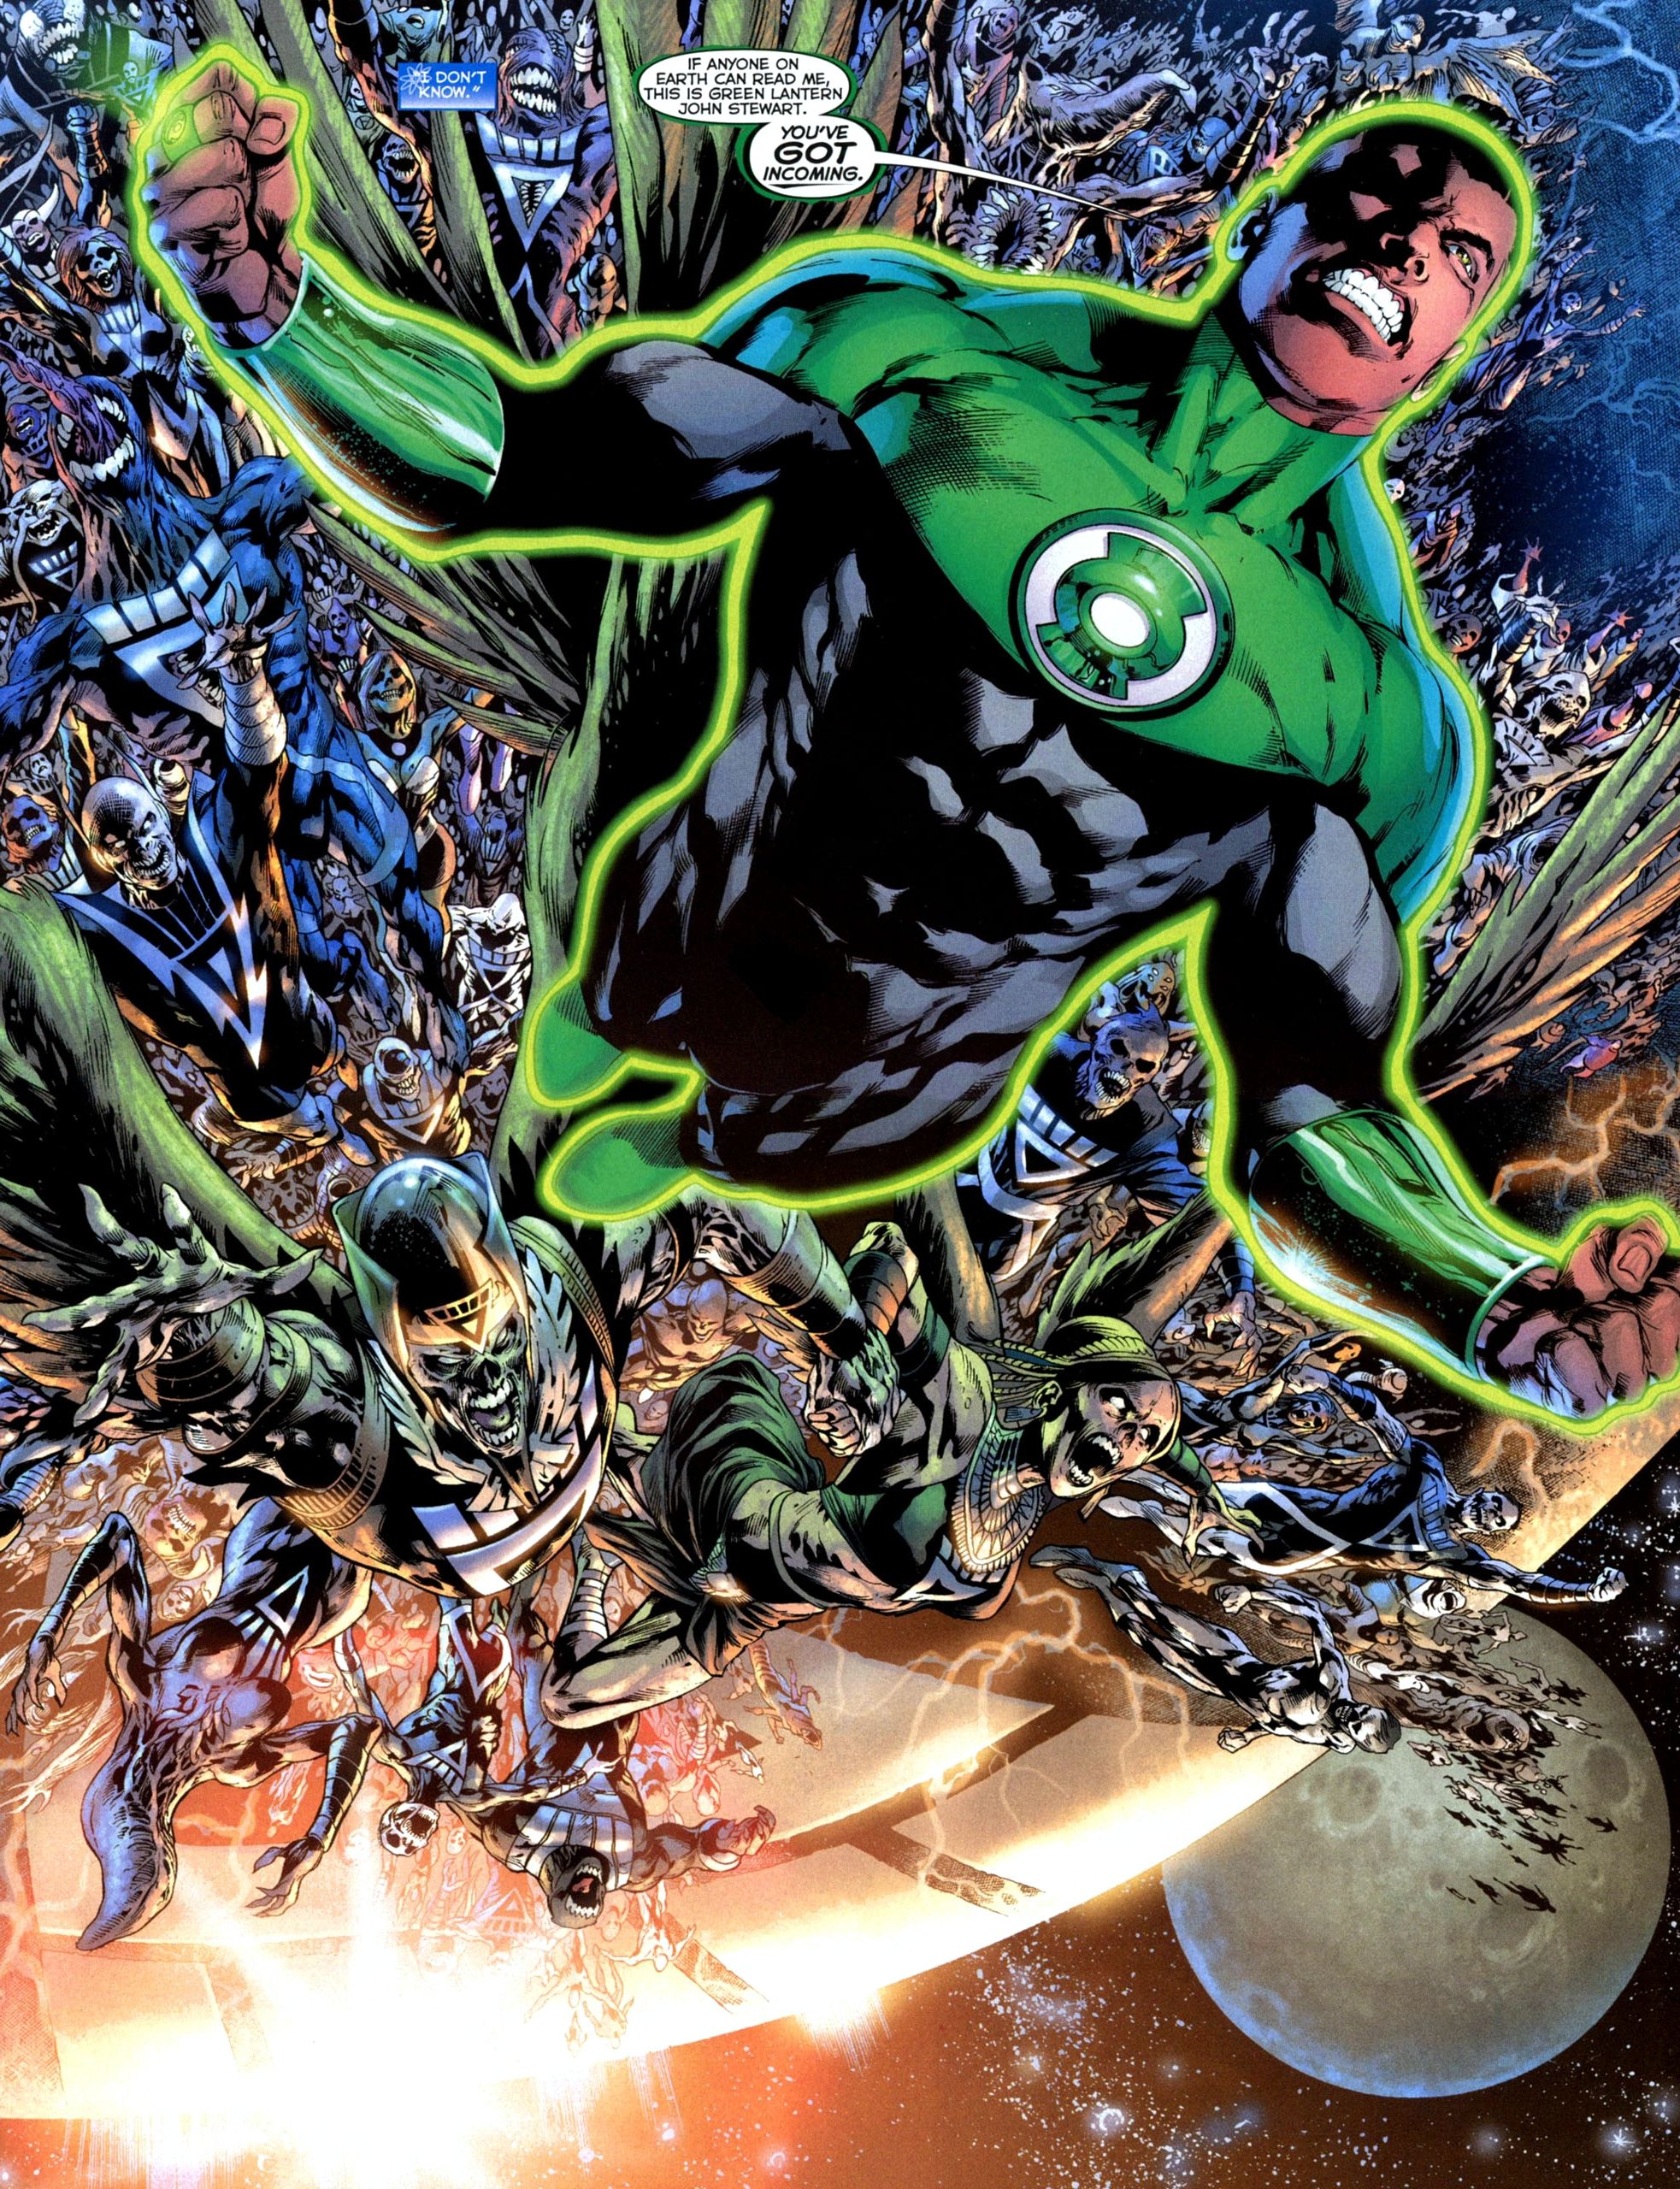 DC COMICS: JOHN STEWART (GREEN LANTERN)